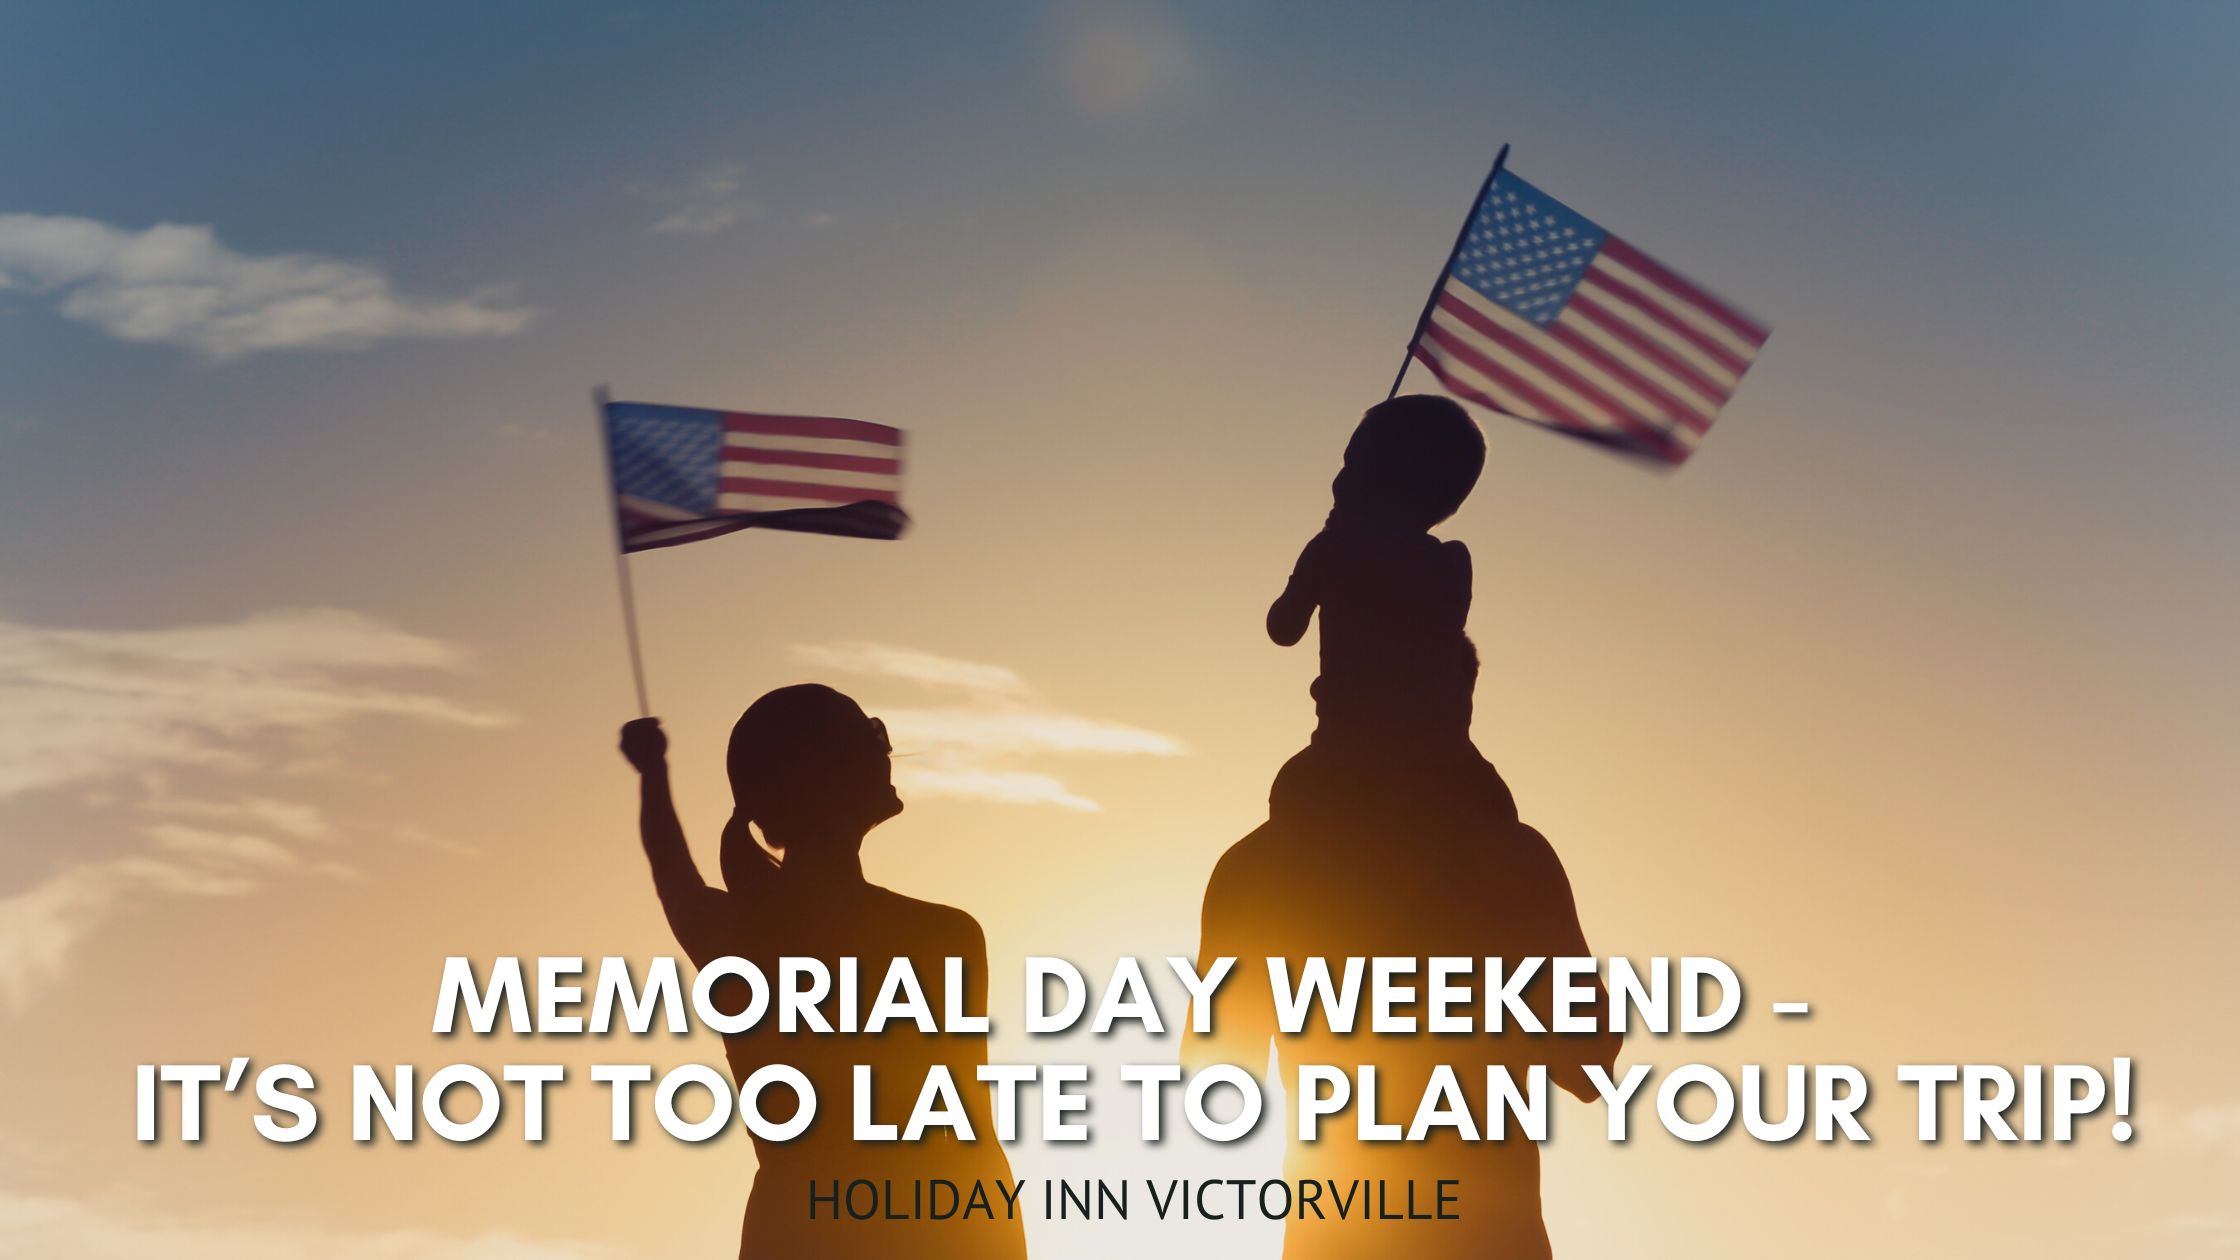 Plan Your Memorial Day Weekend